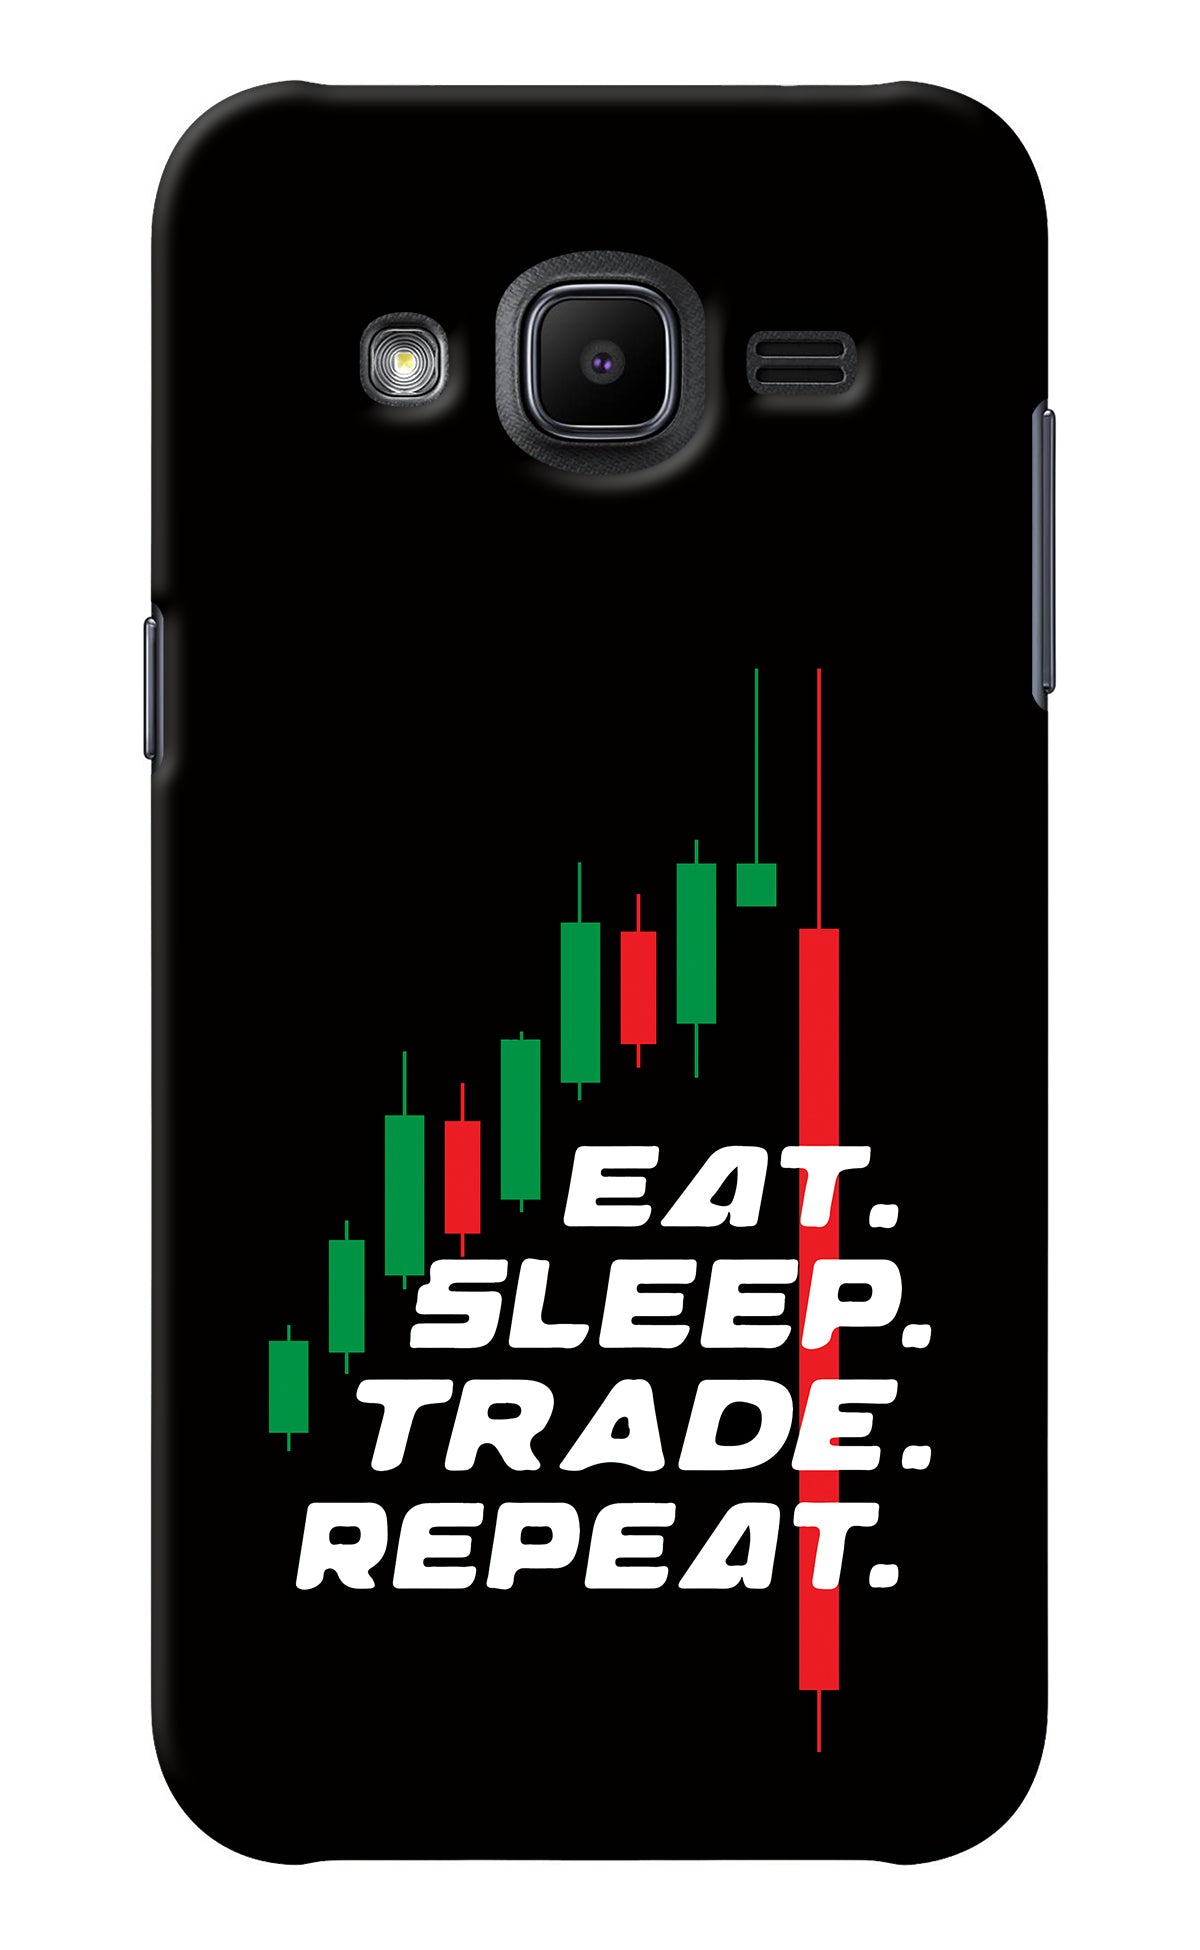 Eat Sleep Trade Repeat Samsung J2 2017 Back Cover